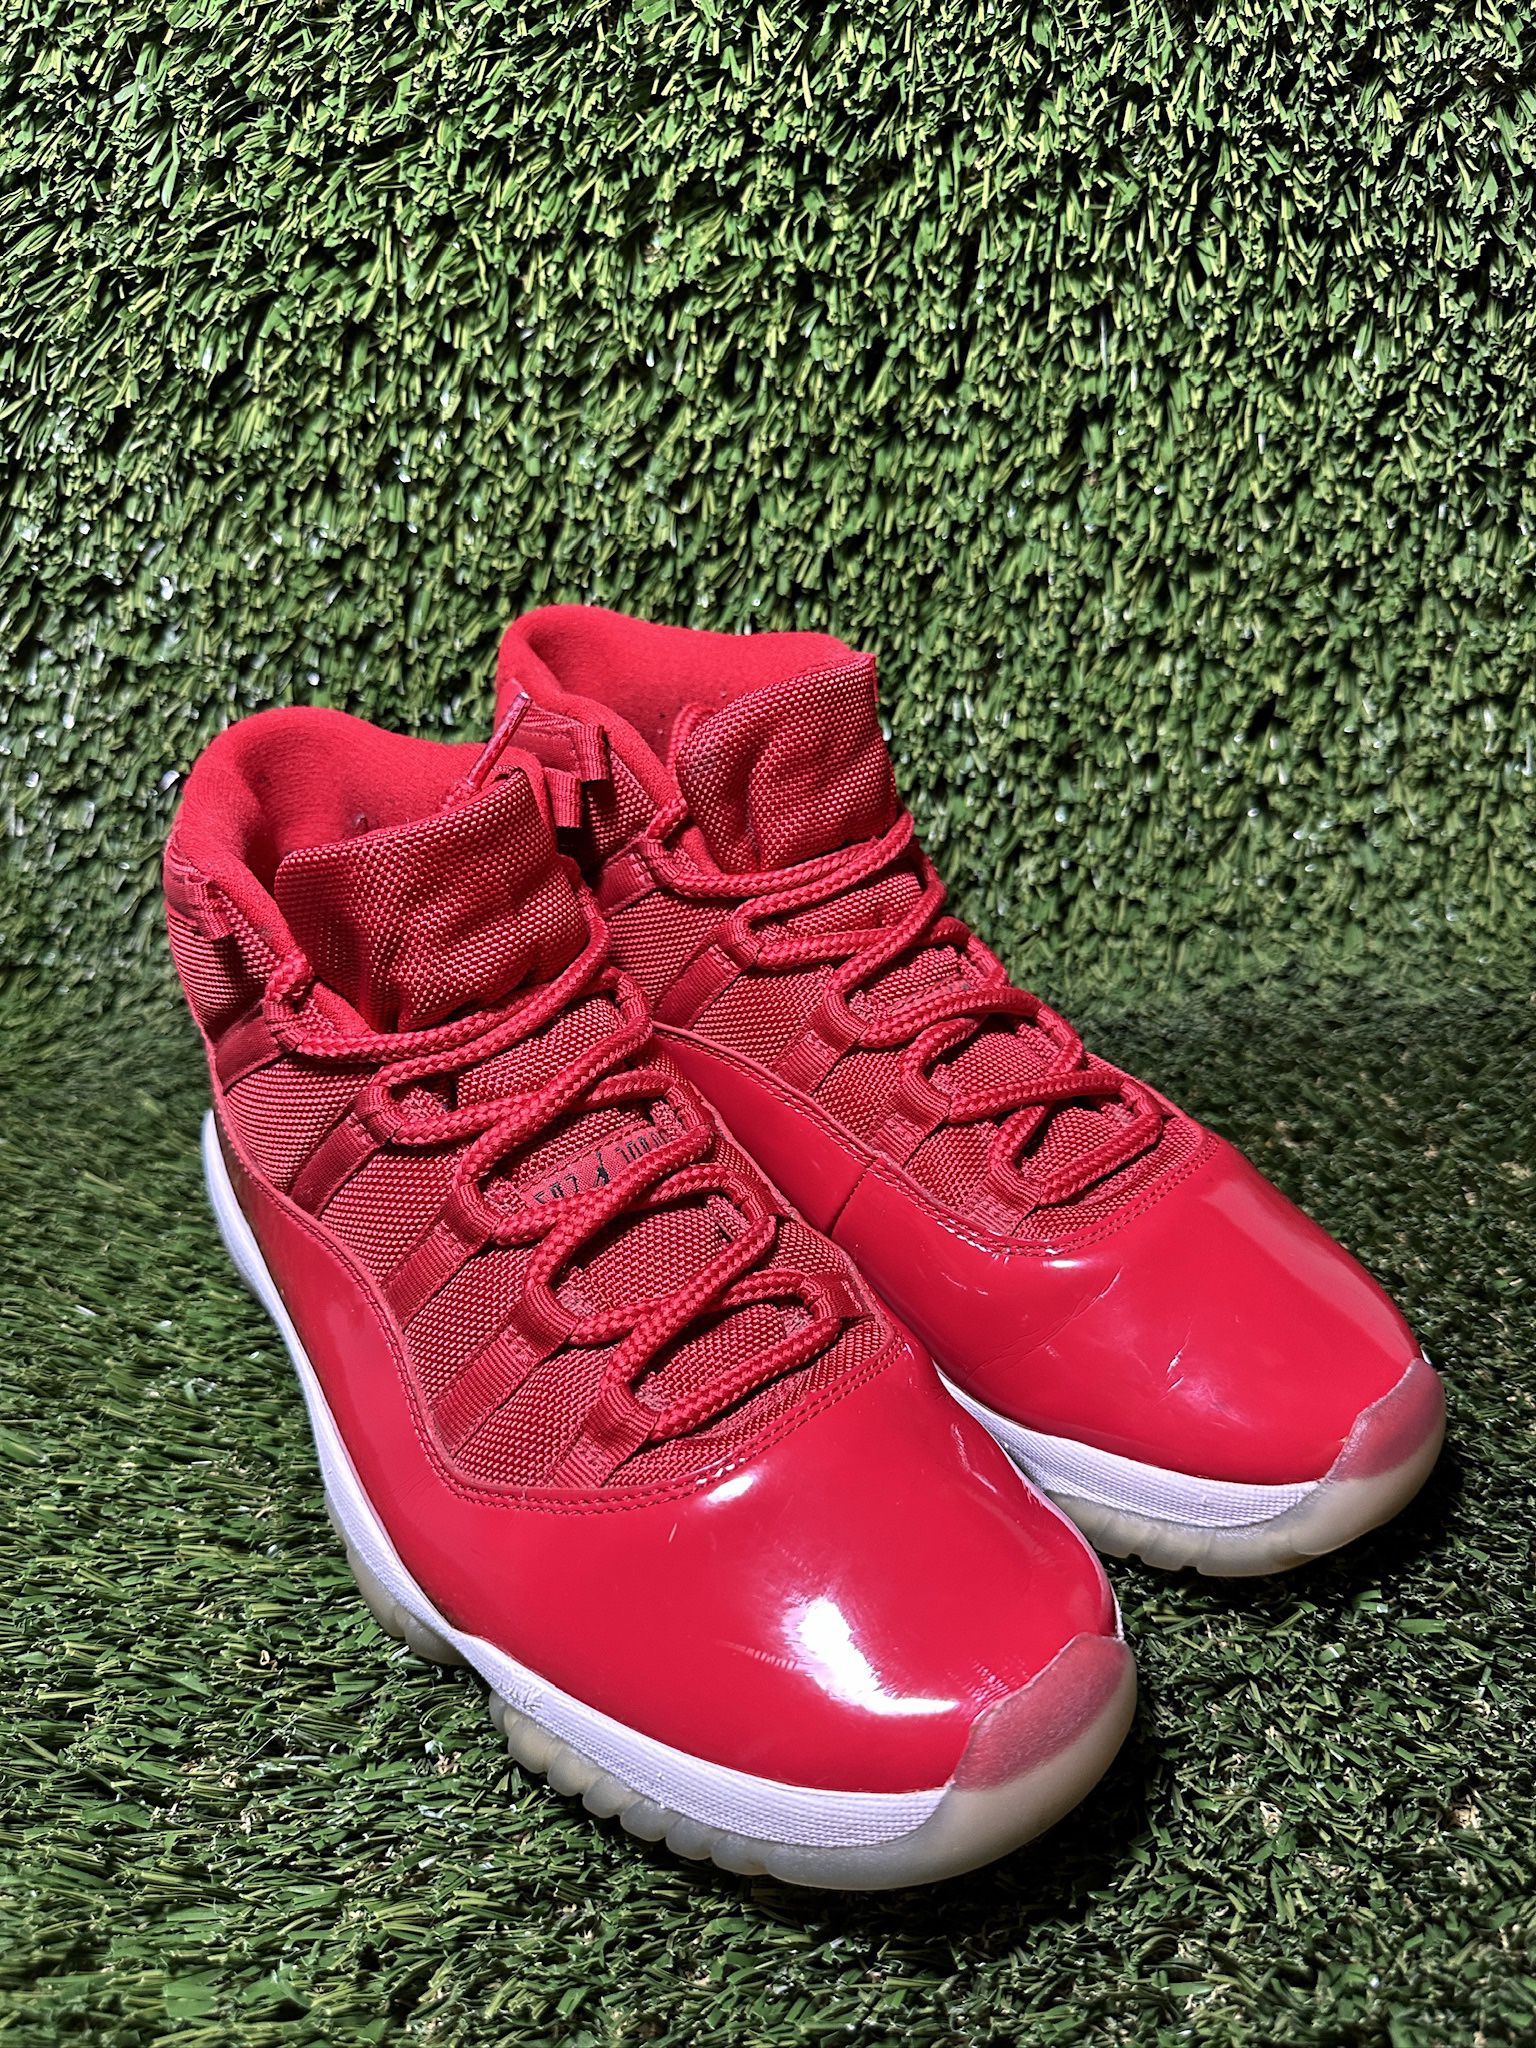 Nike Retro Air Jordan XI 11 Red Win Like 96 378037-623 Mens Size 10